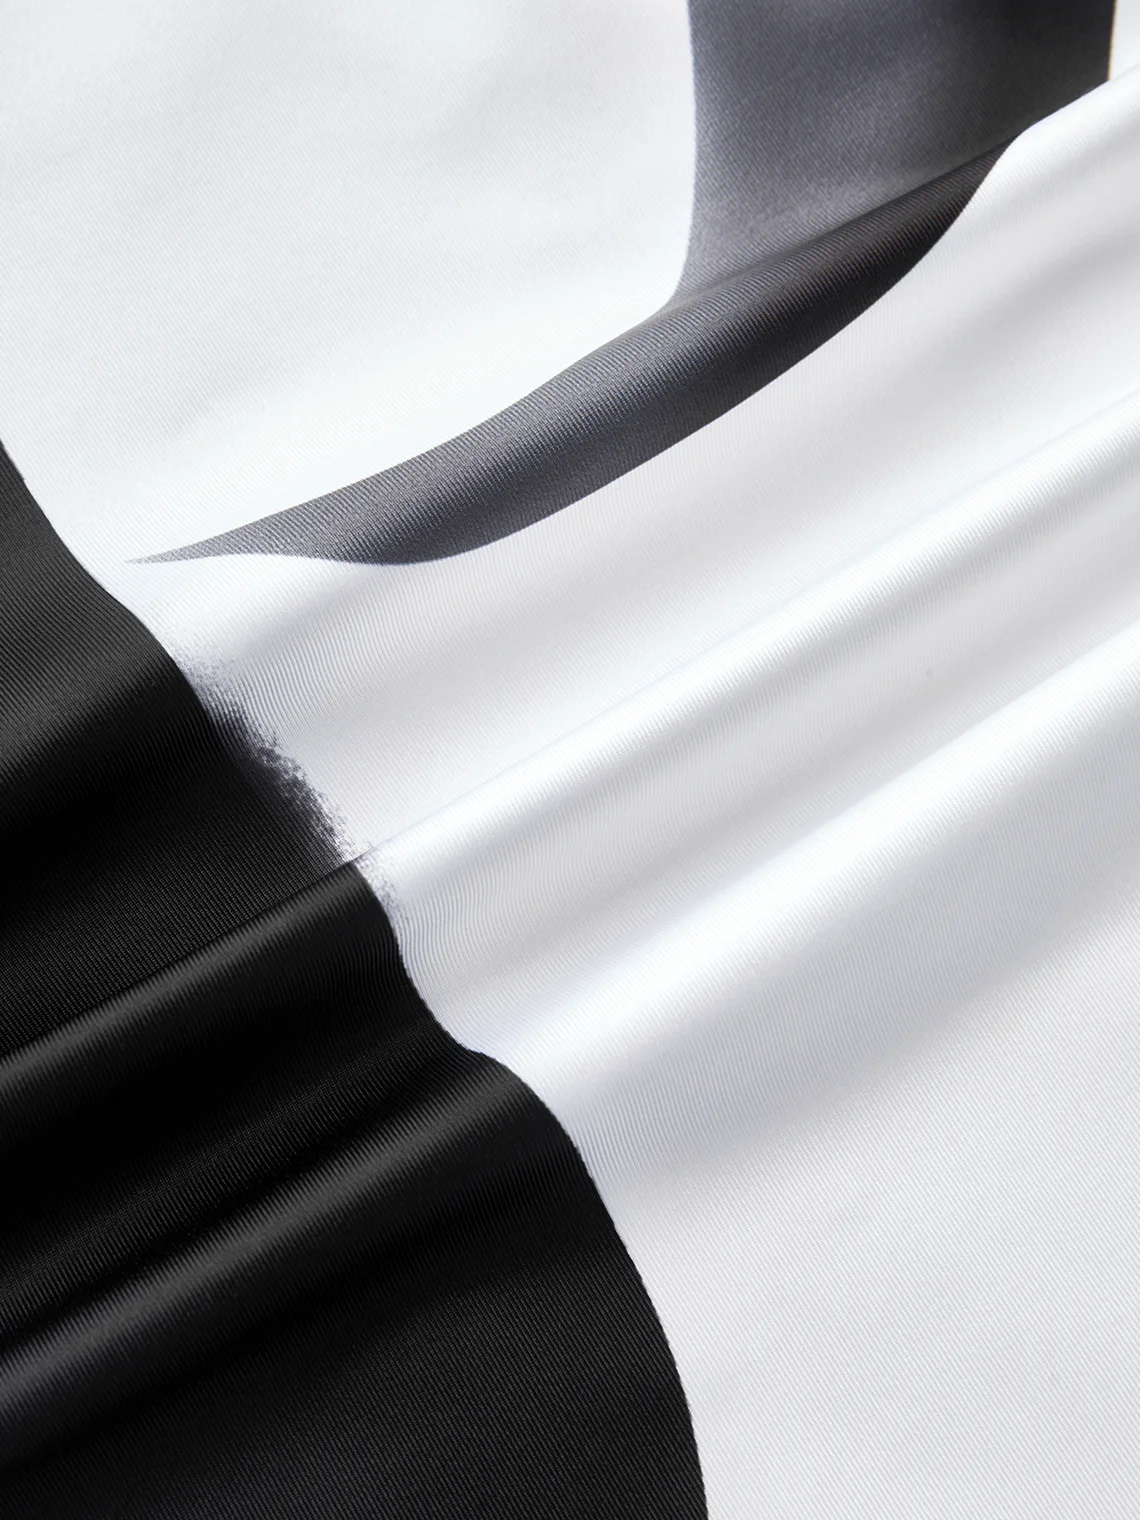 【Final Sale】Edgy Black Body Print Dress Midi Dress